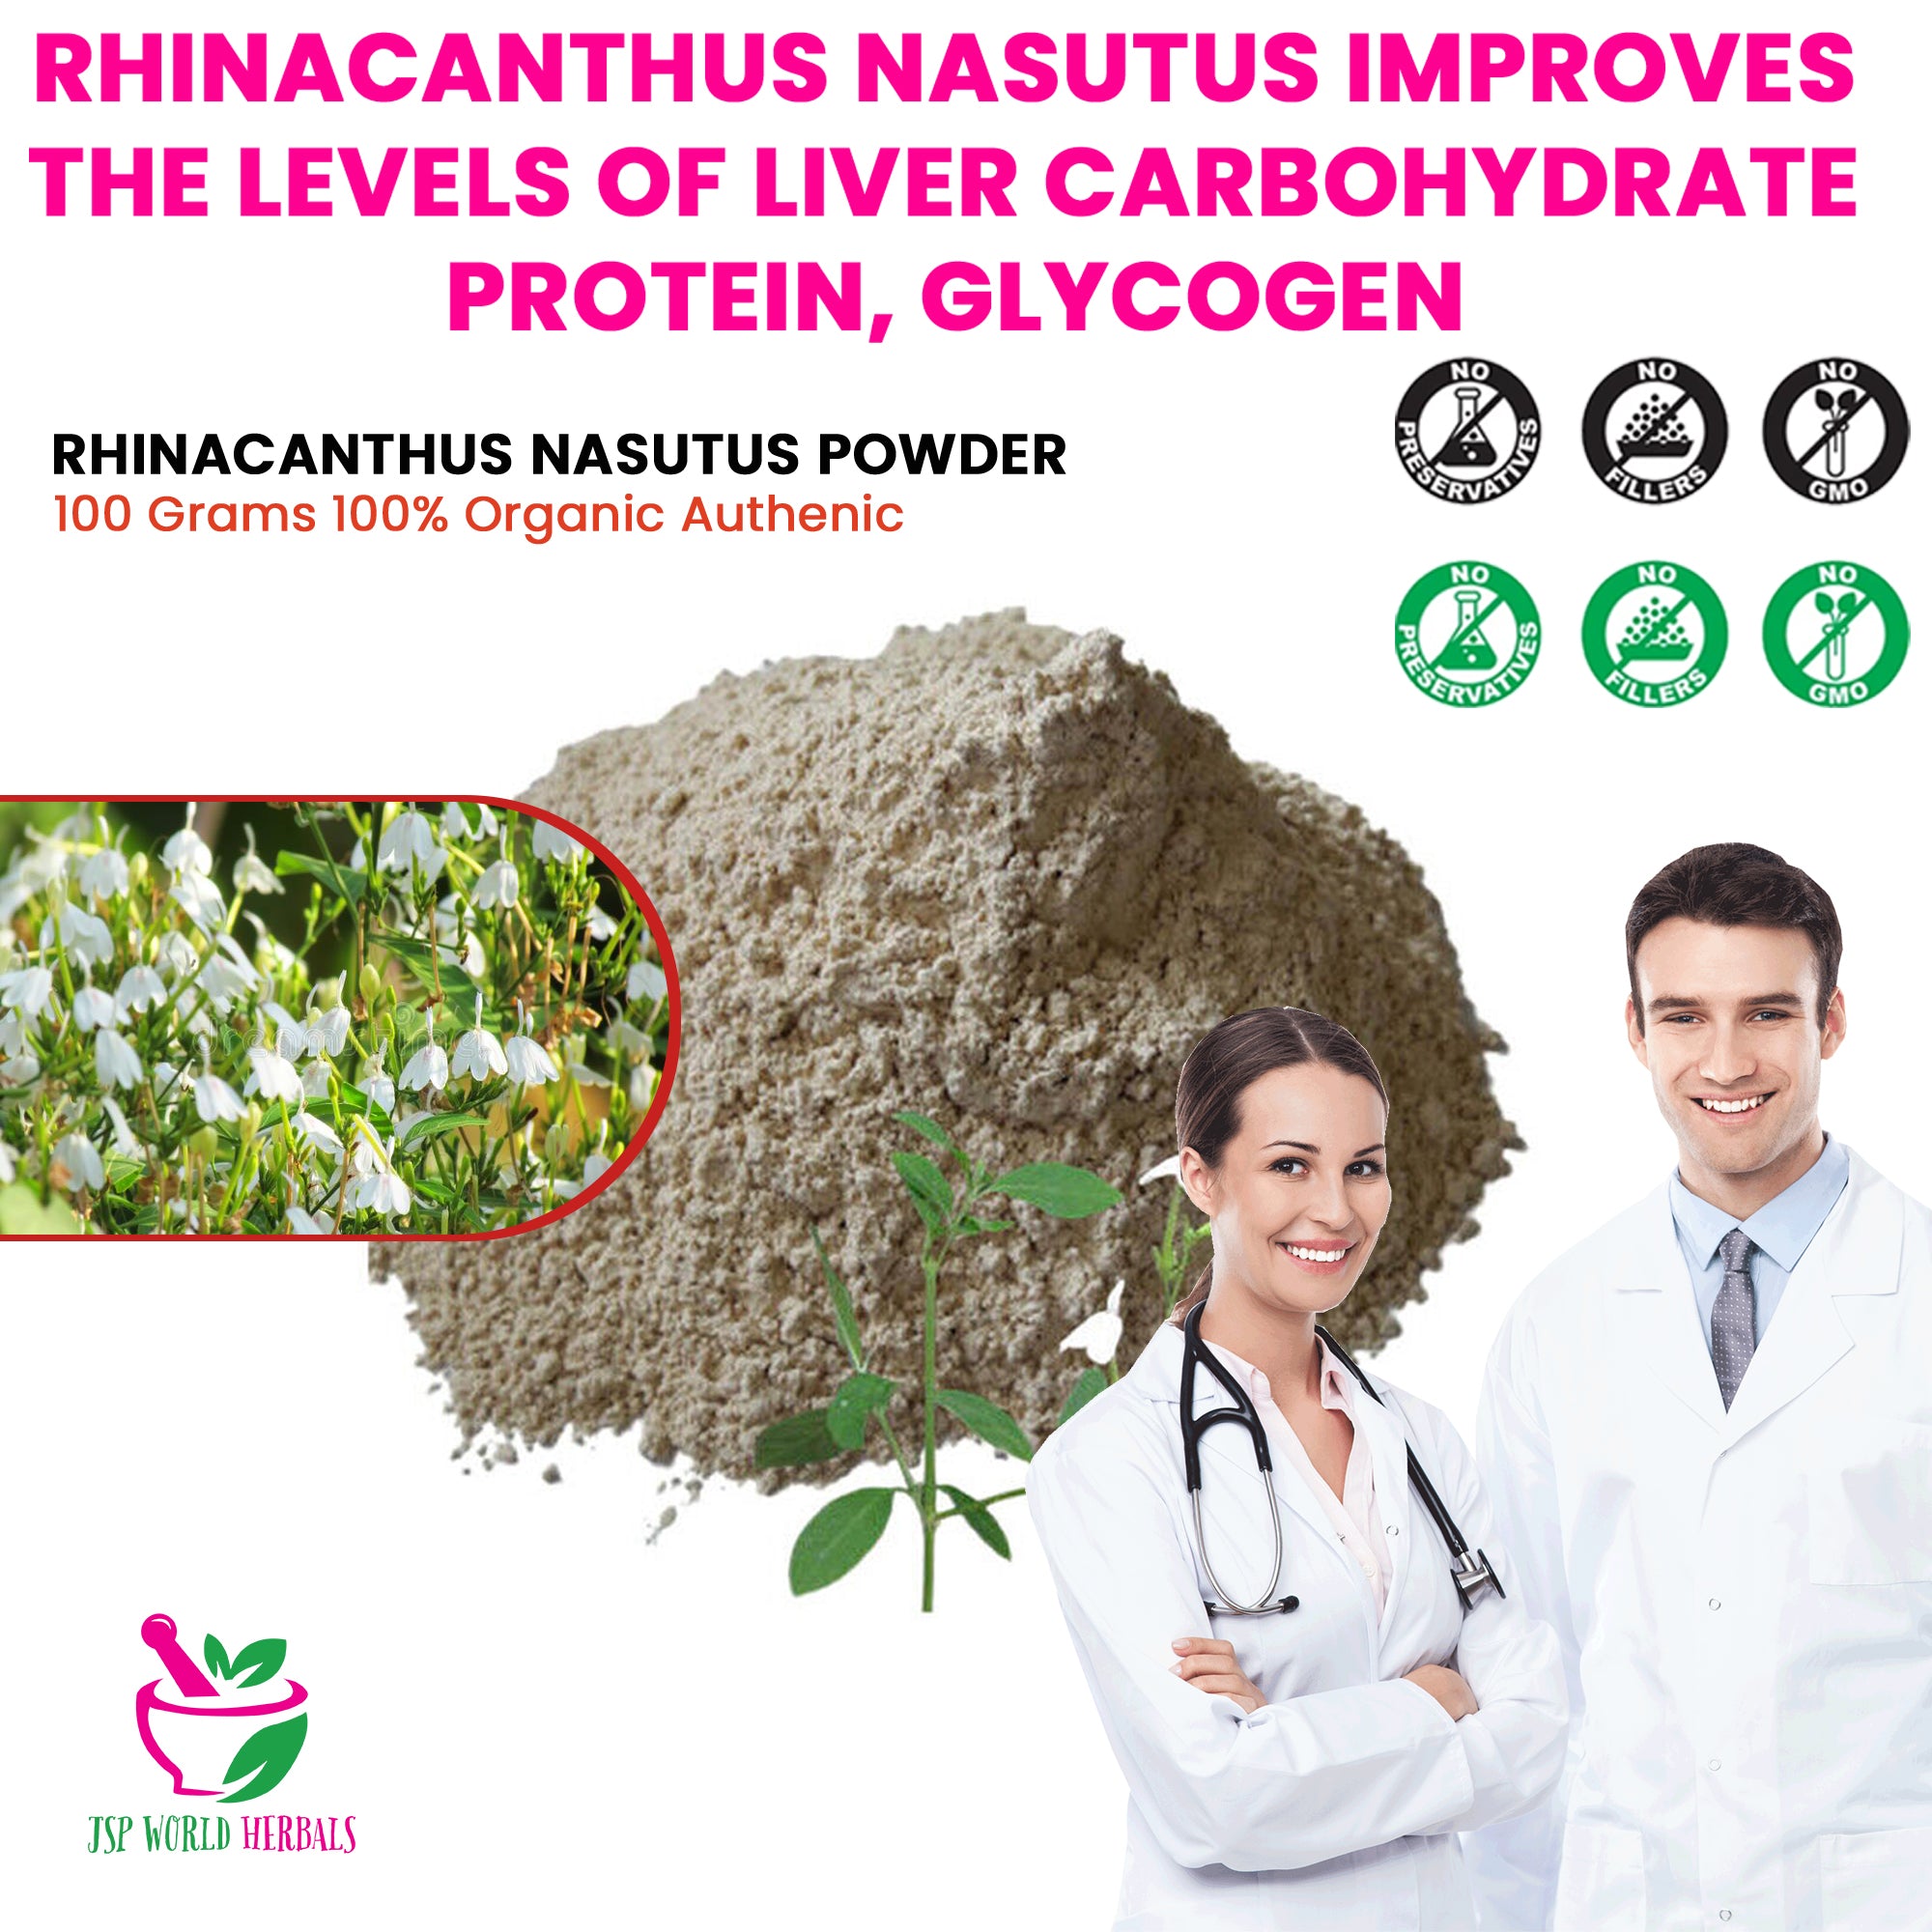 Rhinacanthus nasutus Powder 100 Grams 100% Organic Authenic